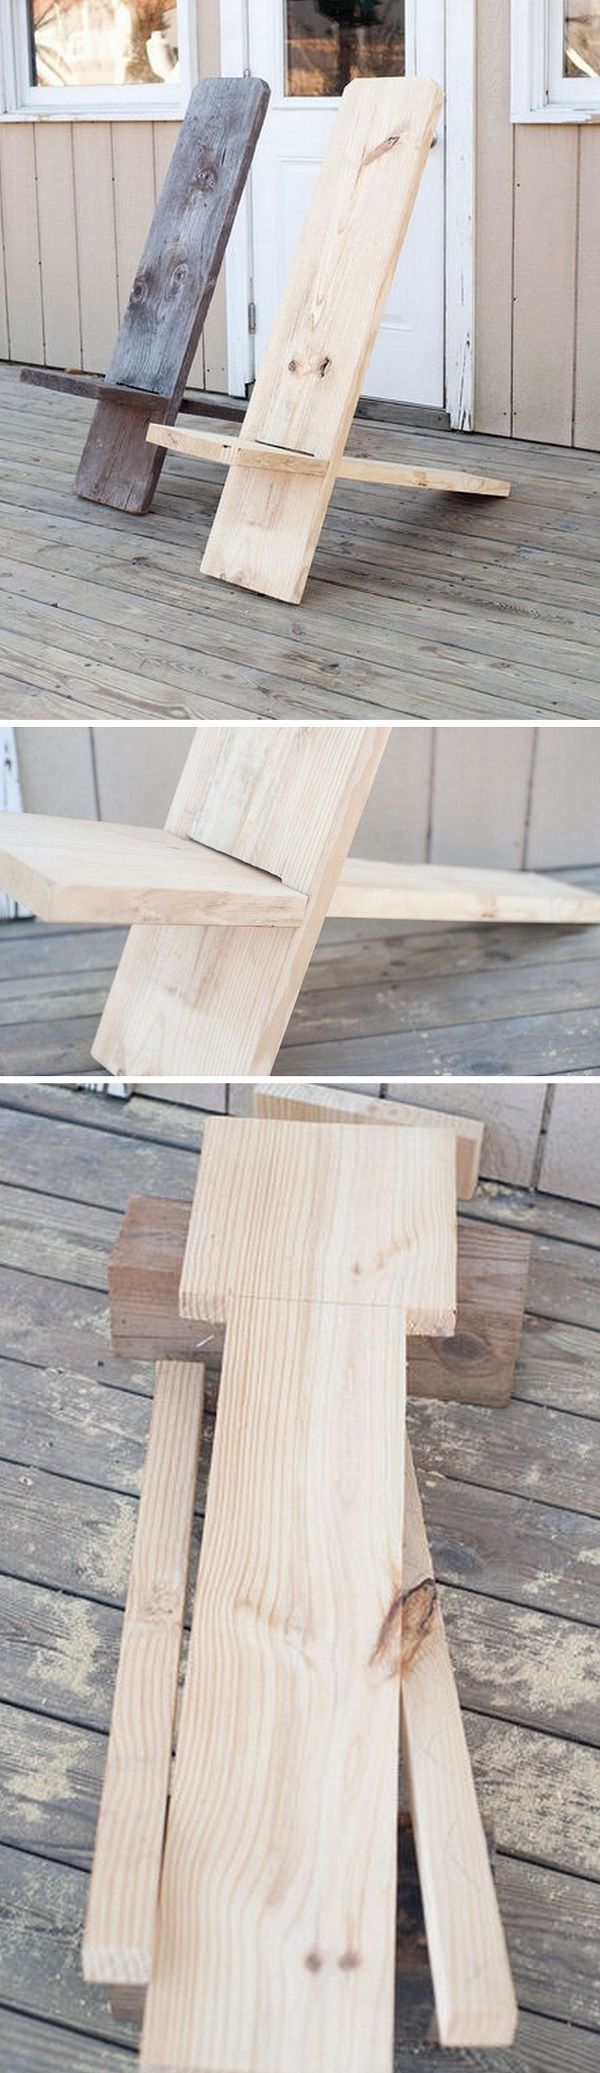 DIY Chairs Ideas